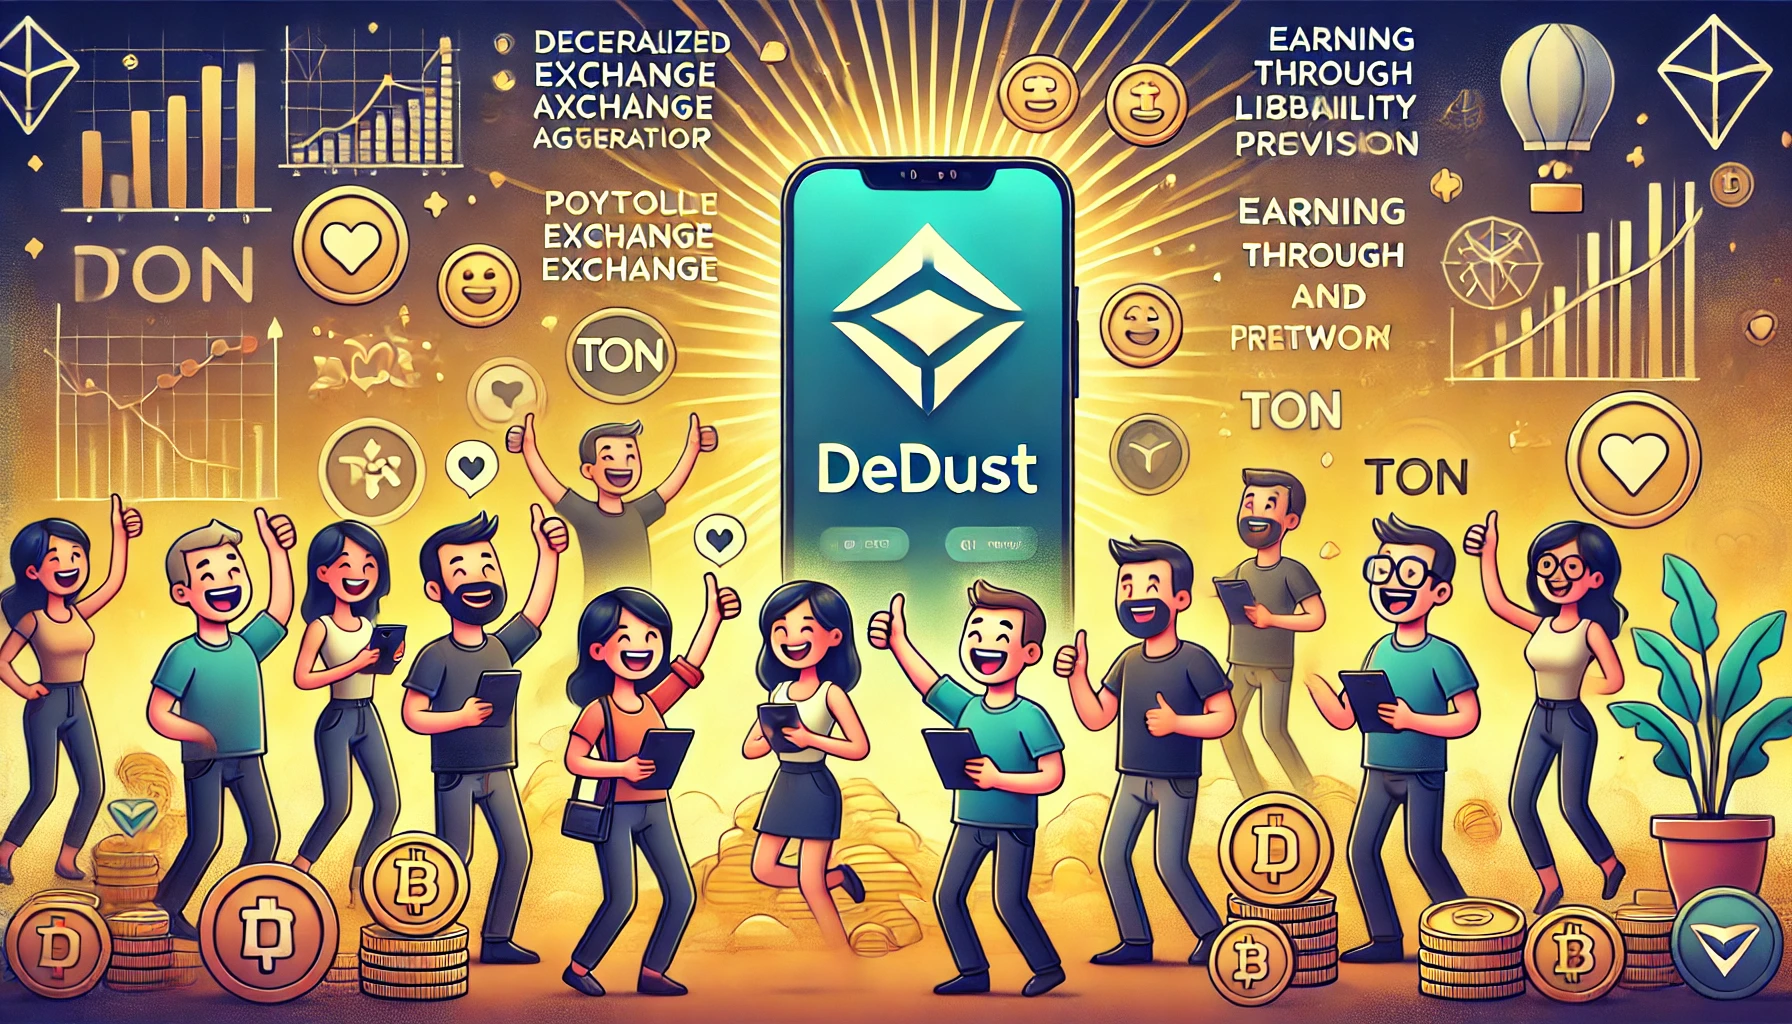 DeDust: DEX aggregator in the TON ecosystem - news